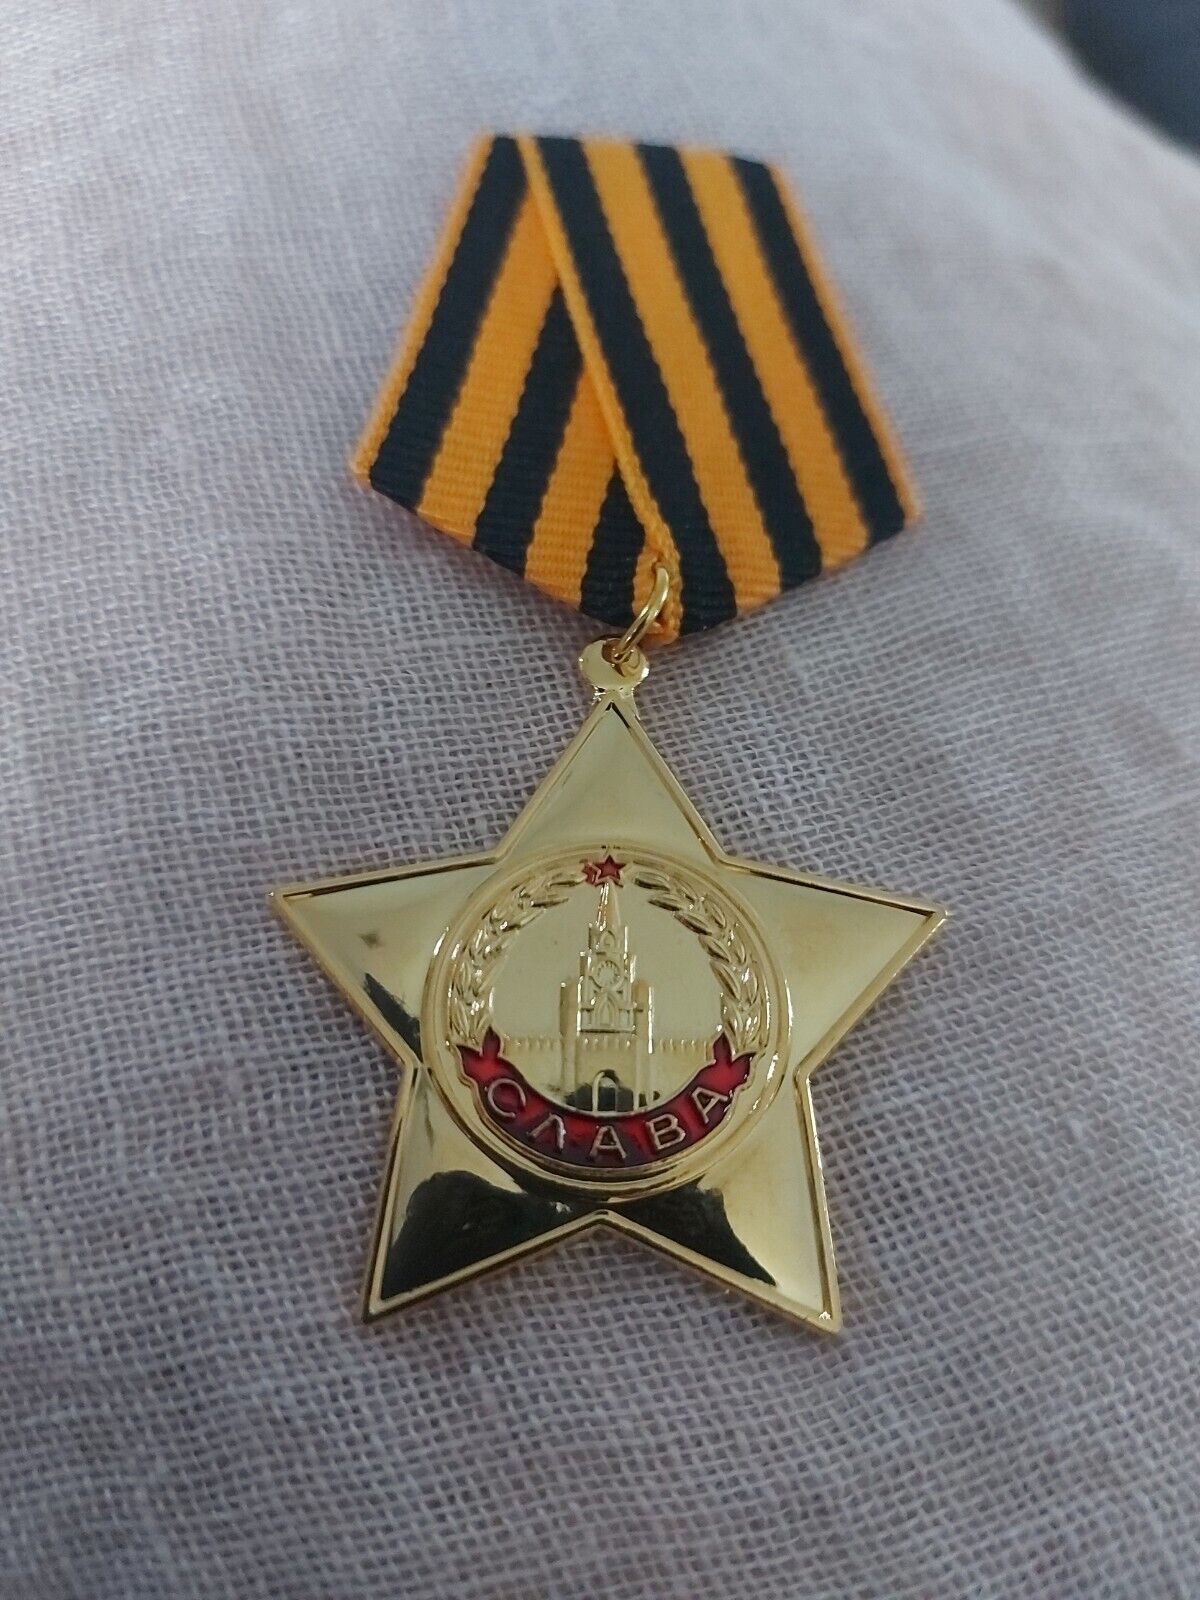 USSR SOVIET WW2 BADGE MEDAL EMBLEM  AWARD  ORDER OF GLORY 1st, REPLICA